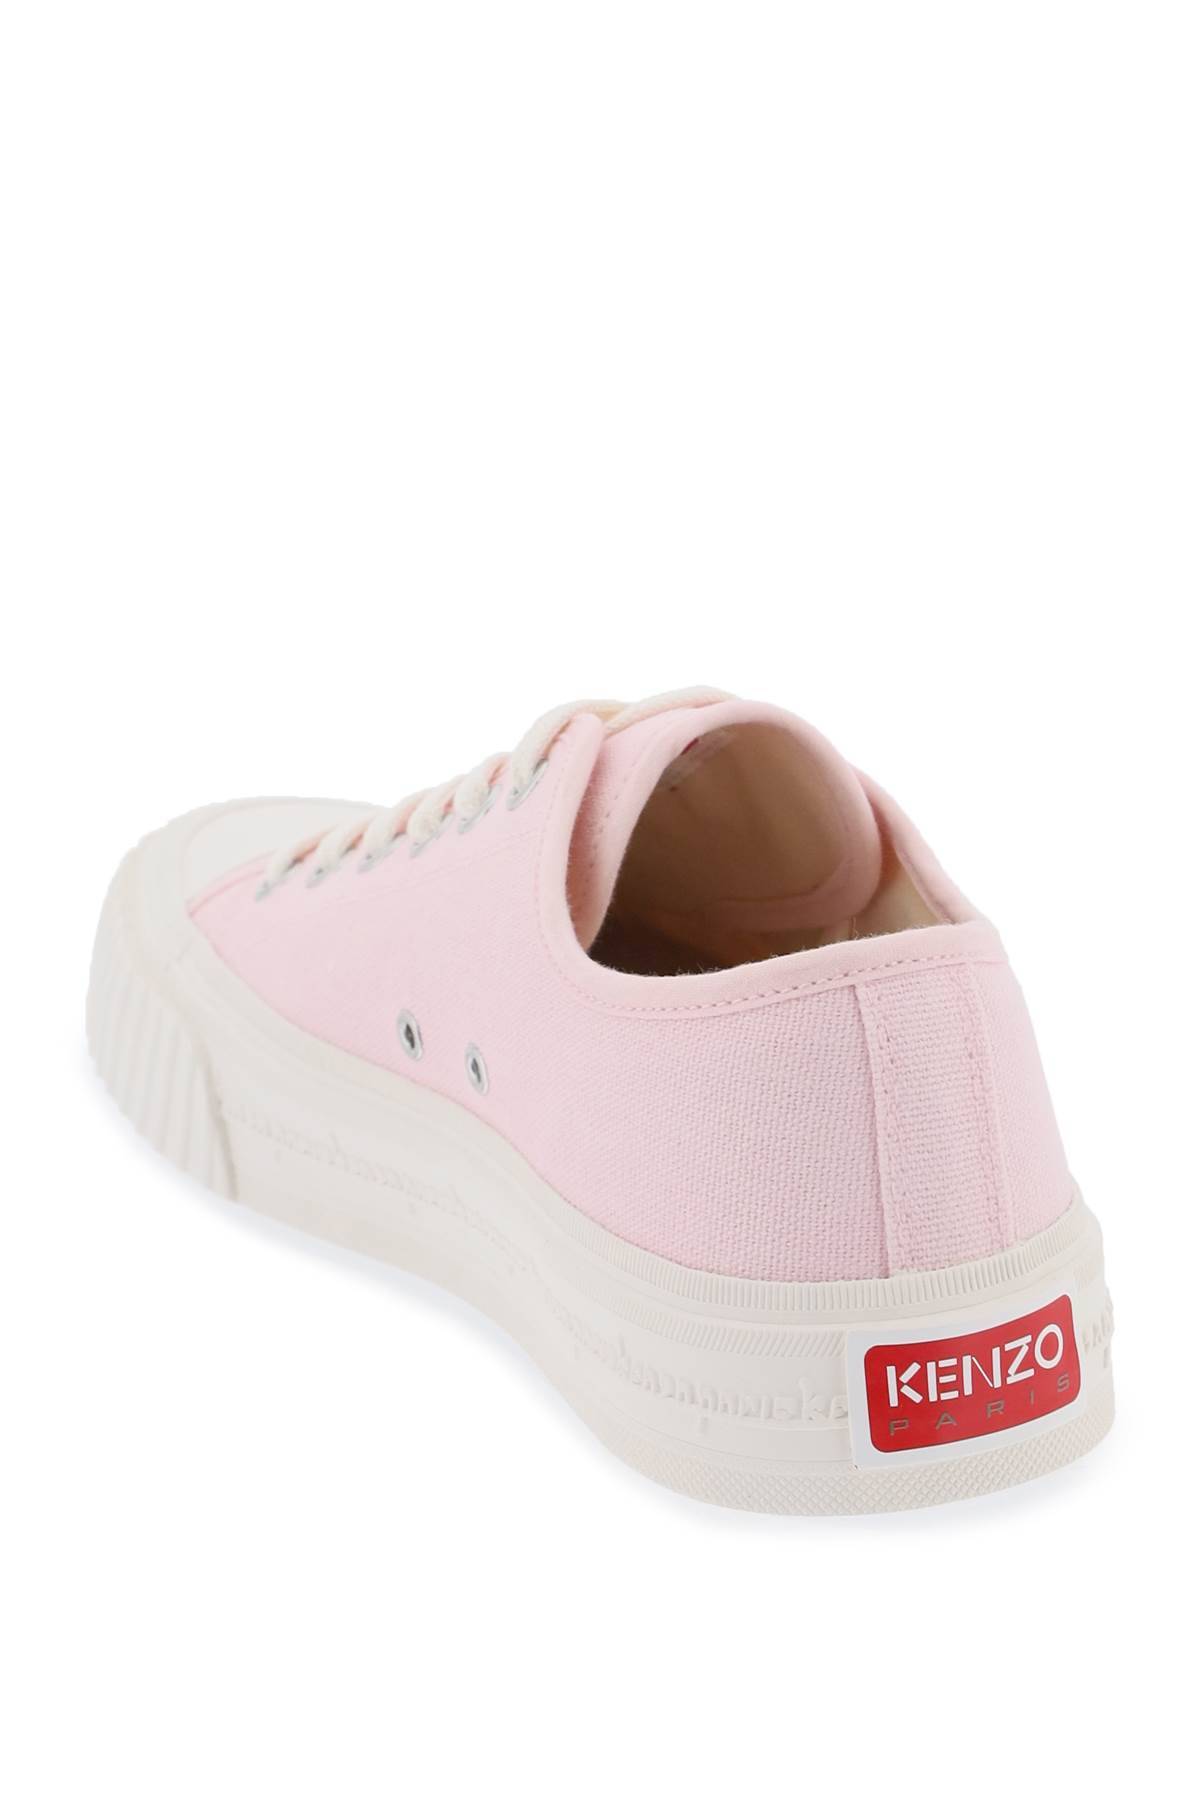 Shop Kenzo Canvas School Sneakers In Pink